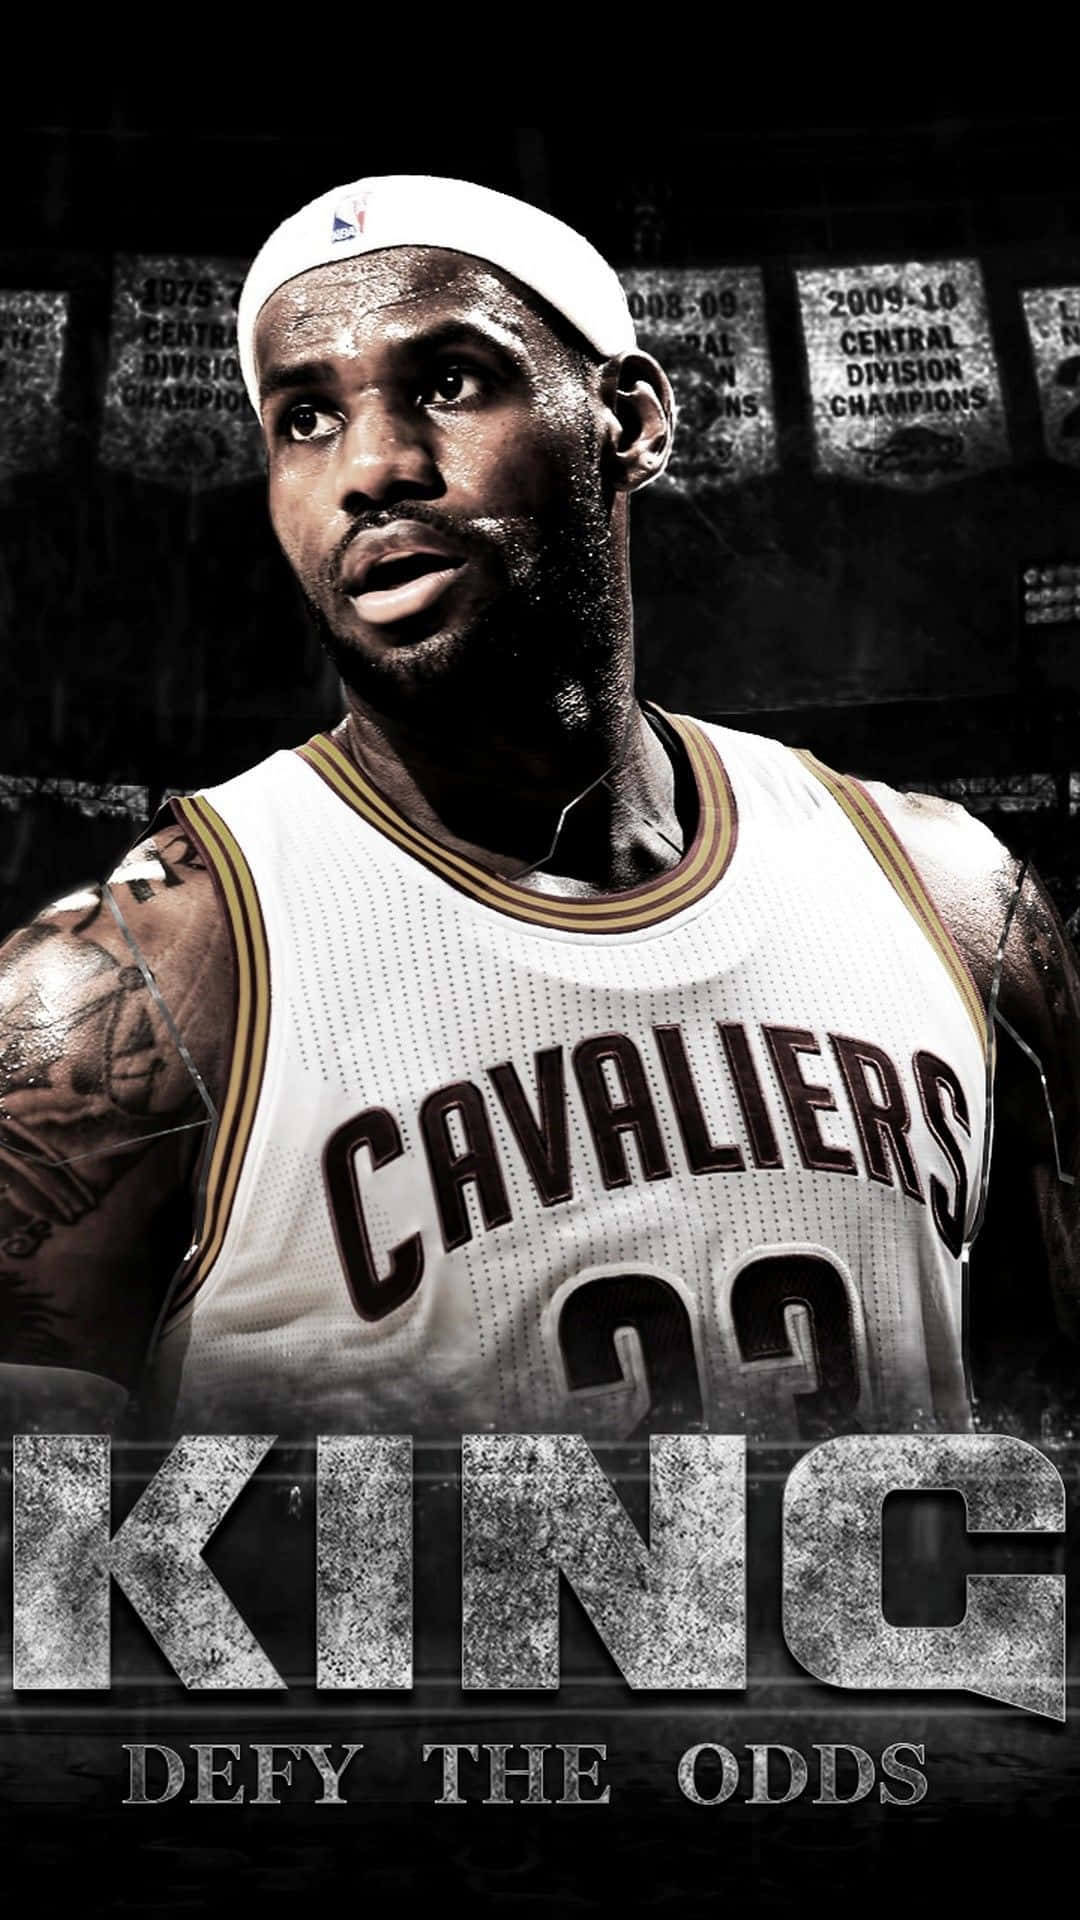 Get the new iPhone featuring NBA superstar Lebron James Wallpaper